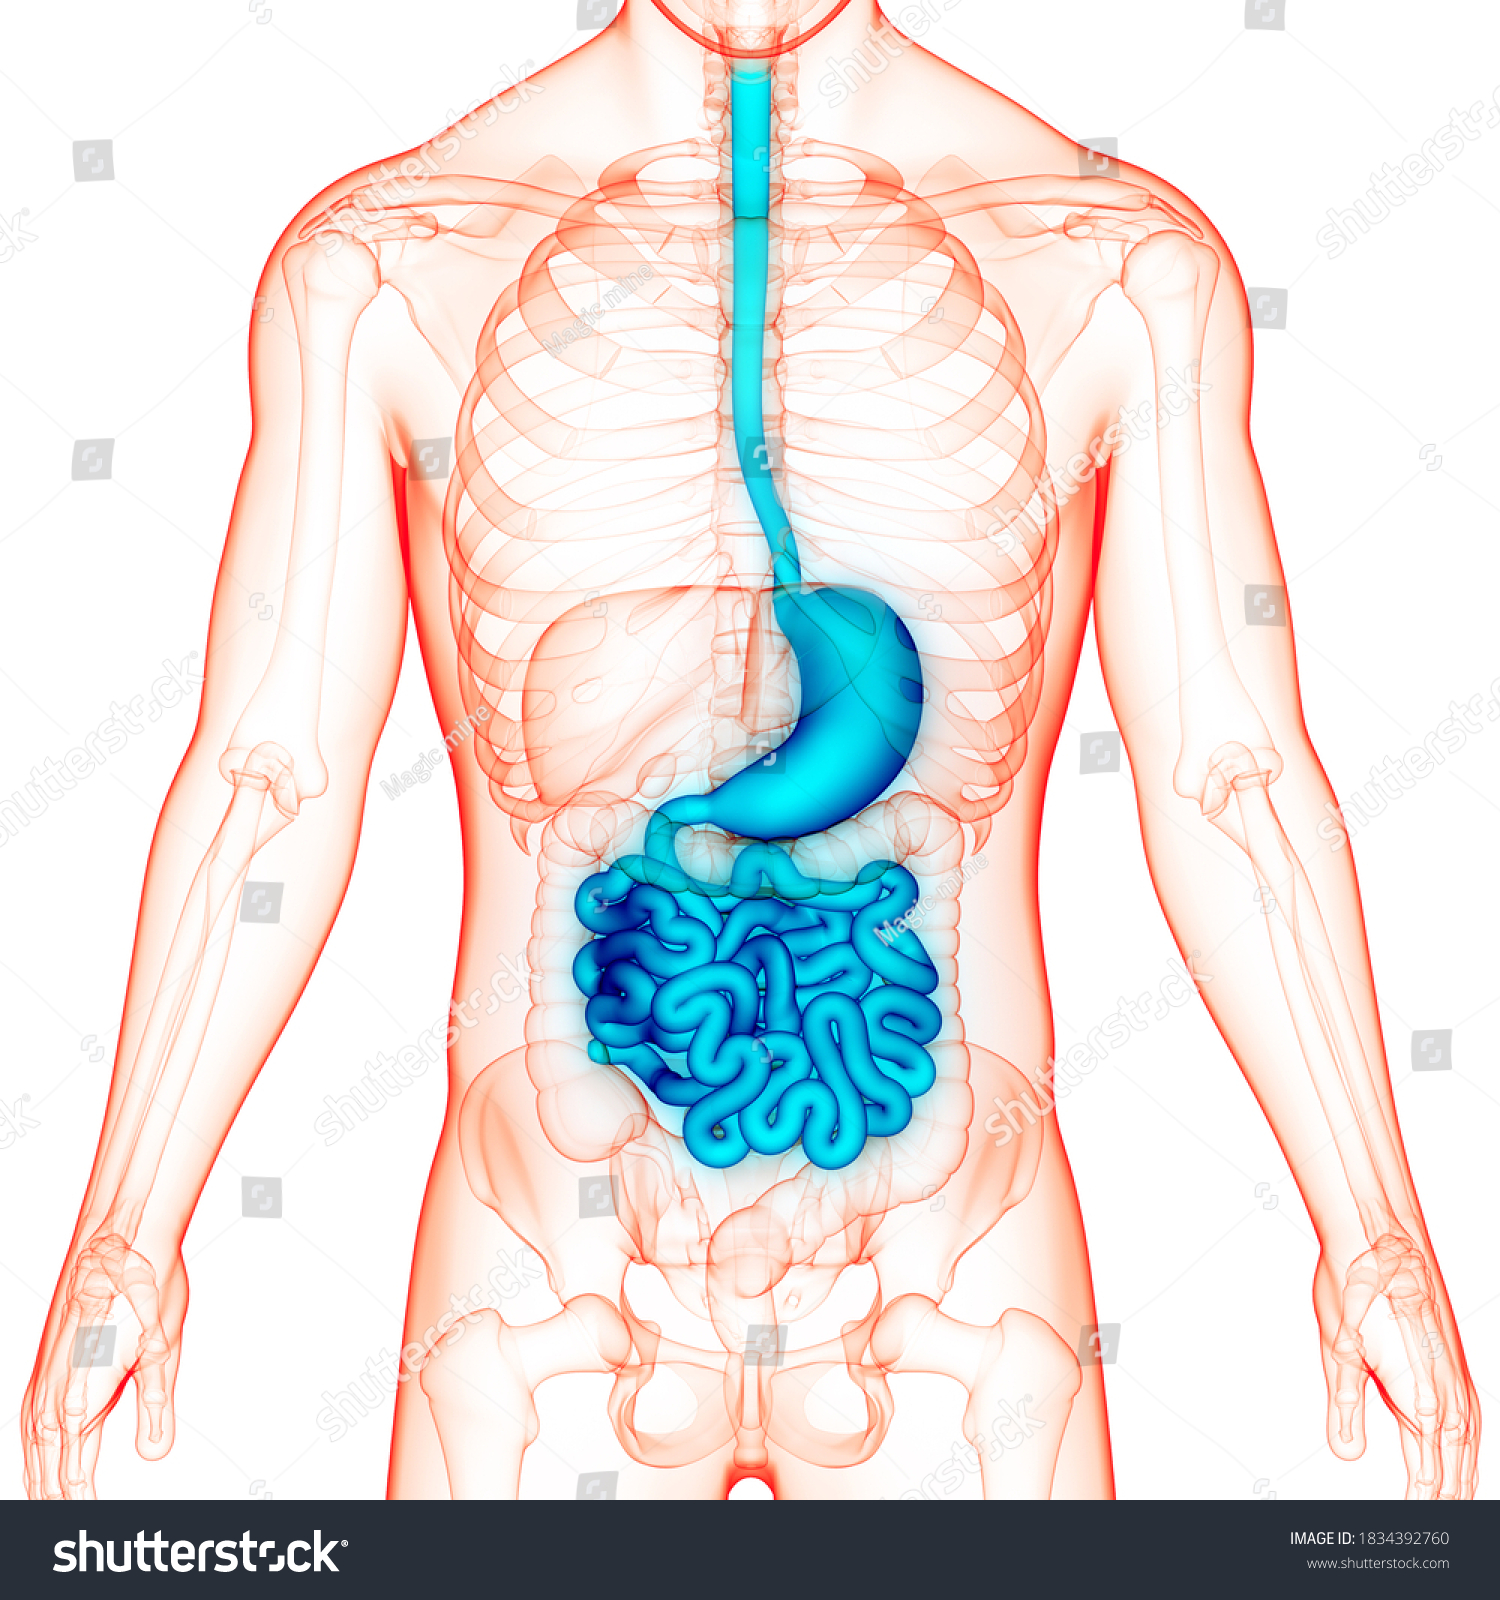 Human Digestive System Stomach Small Intestine Stock Illustration 1834392760 Shutterstock